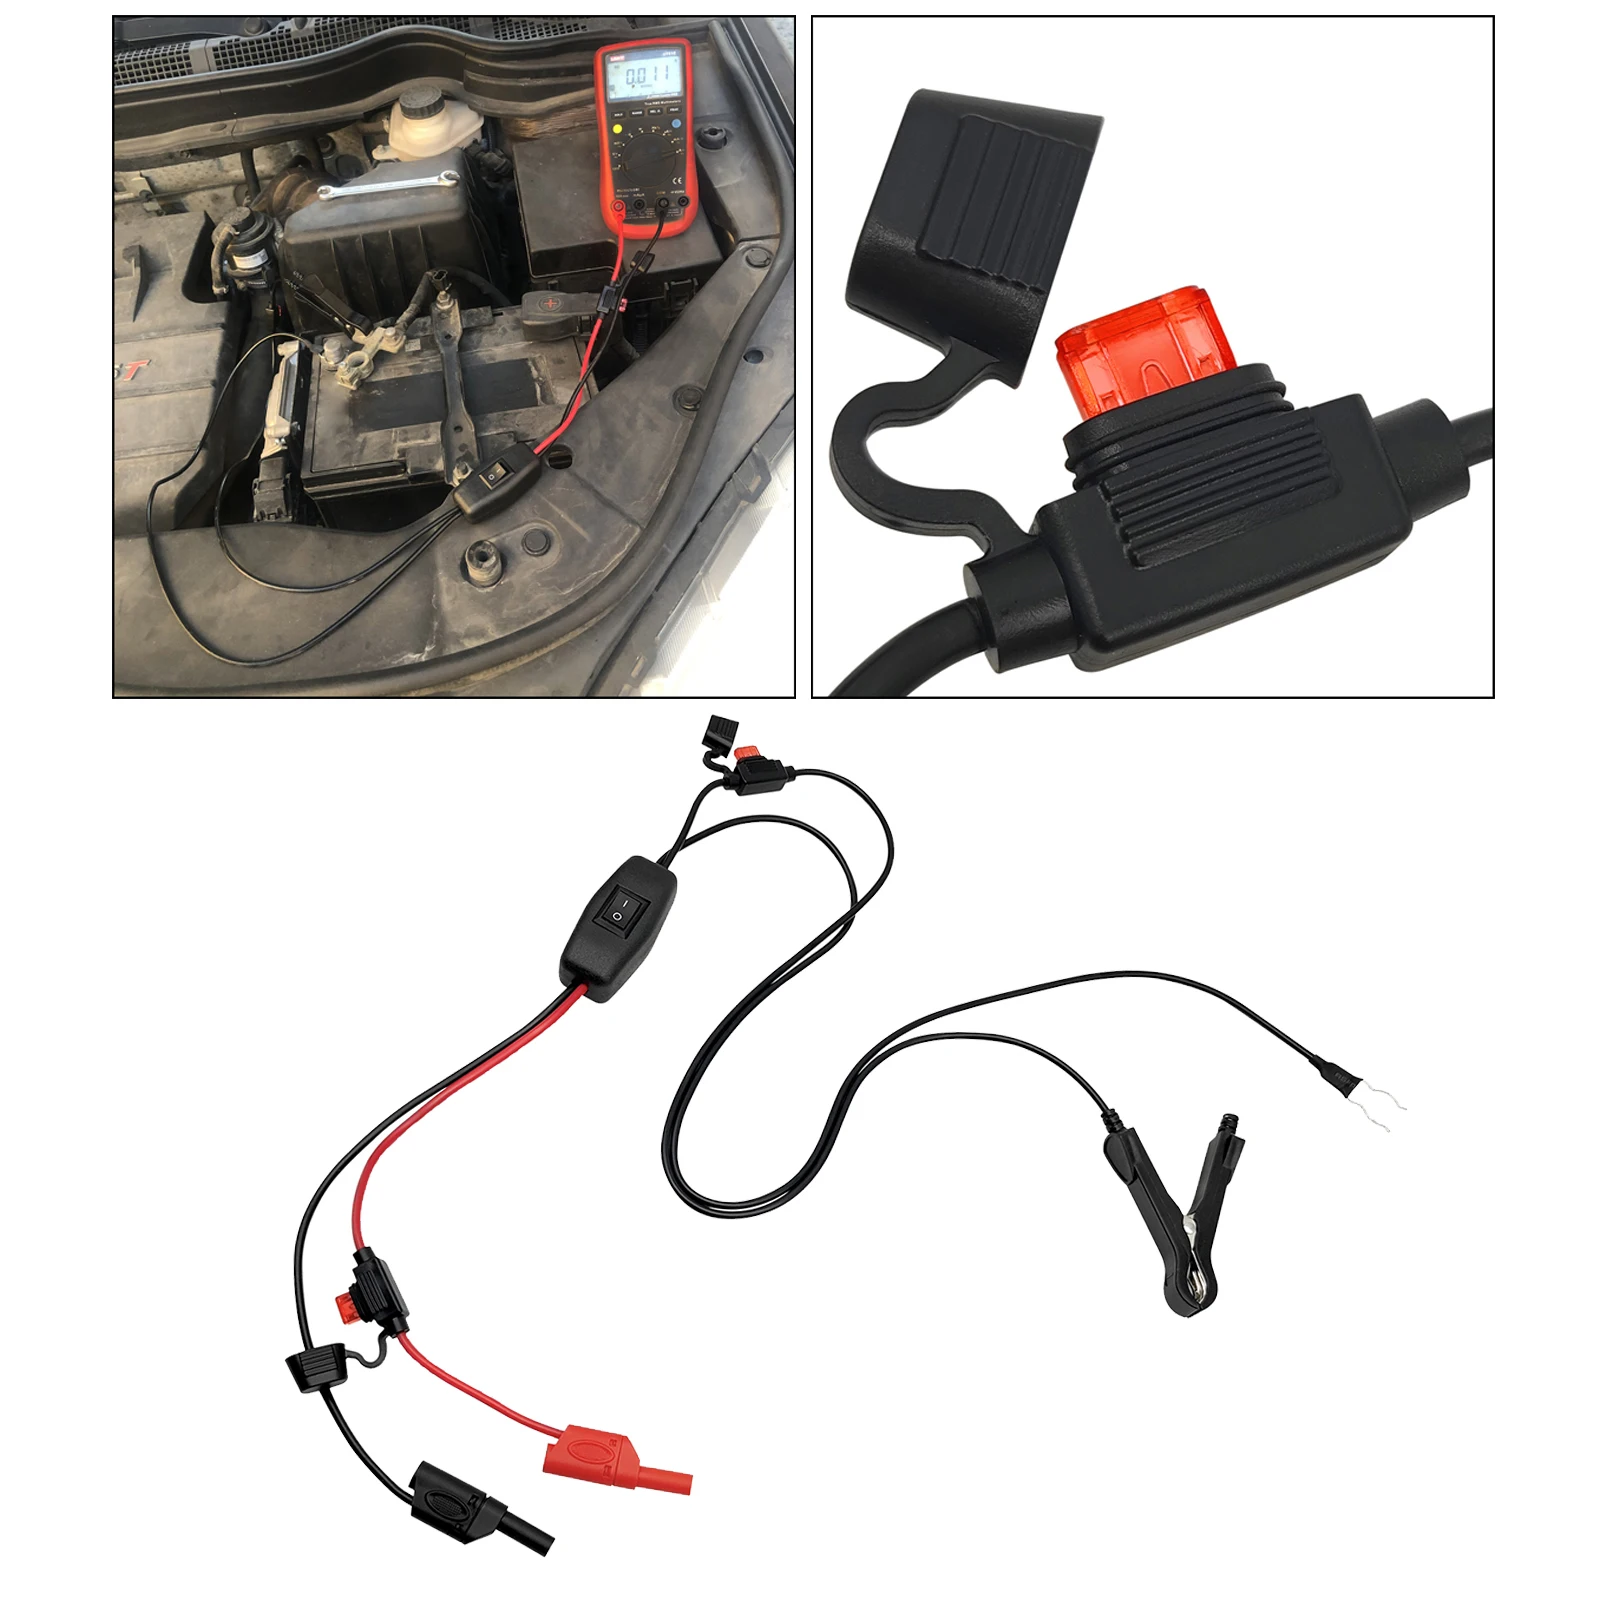 Car Parasitic Drain Tester Power Probe Voltage Diagnostic Tool Automotive Battery Test